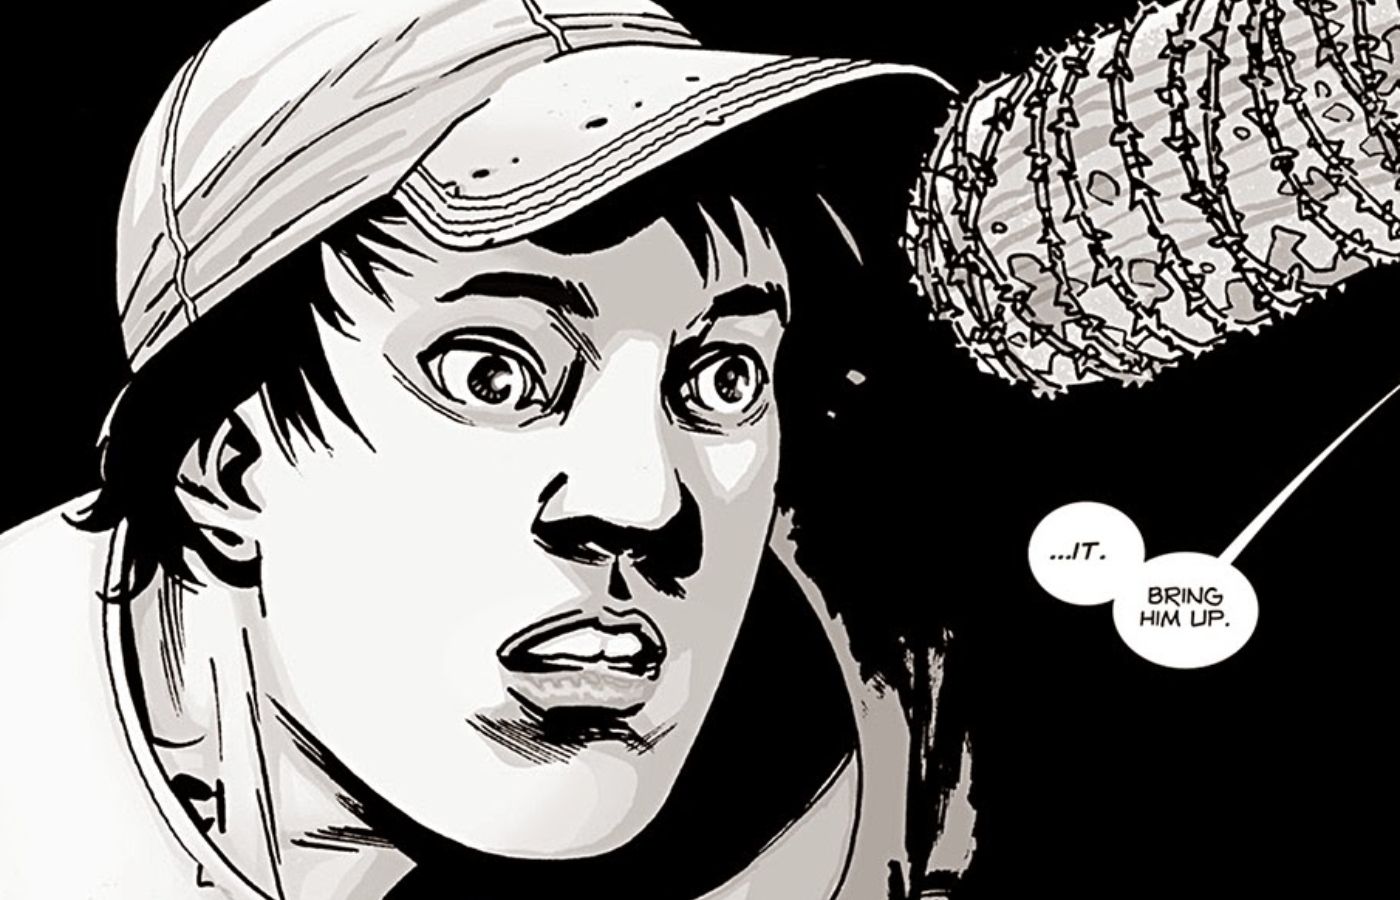 Negan point his baseball bat at Glenn, choosing him to die in The Walking Dead.